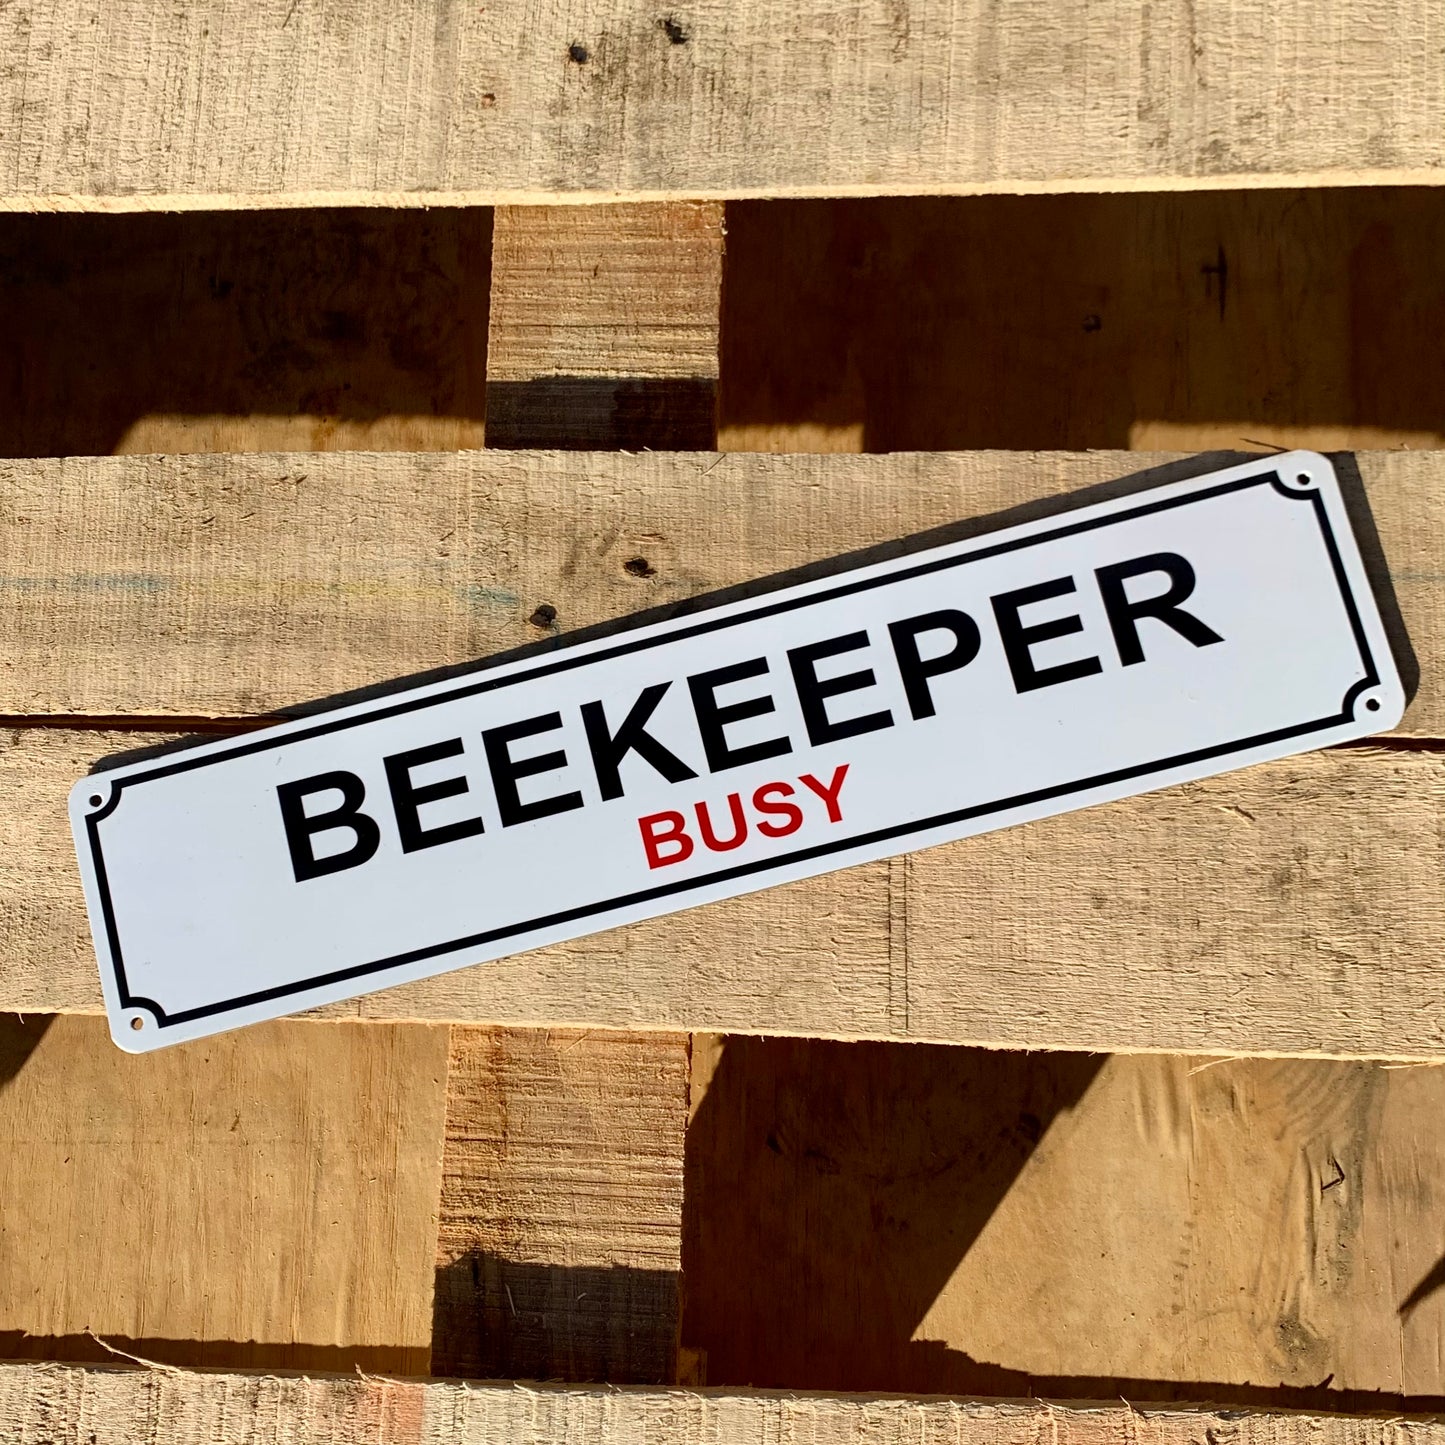 Sign: Beekeeper Busy